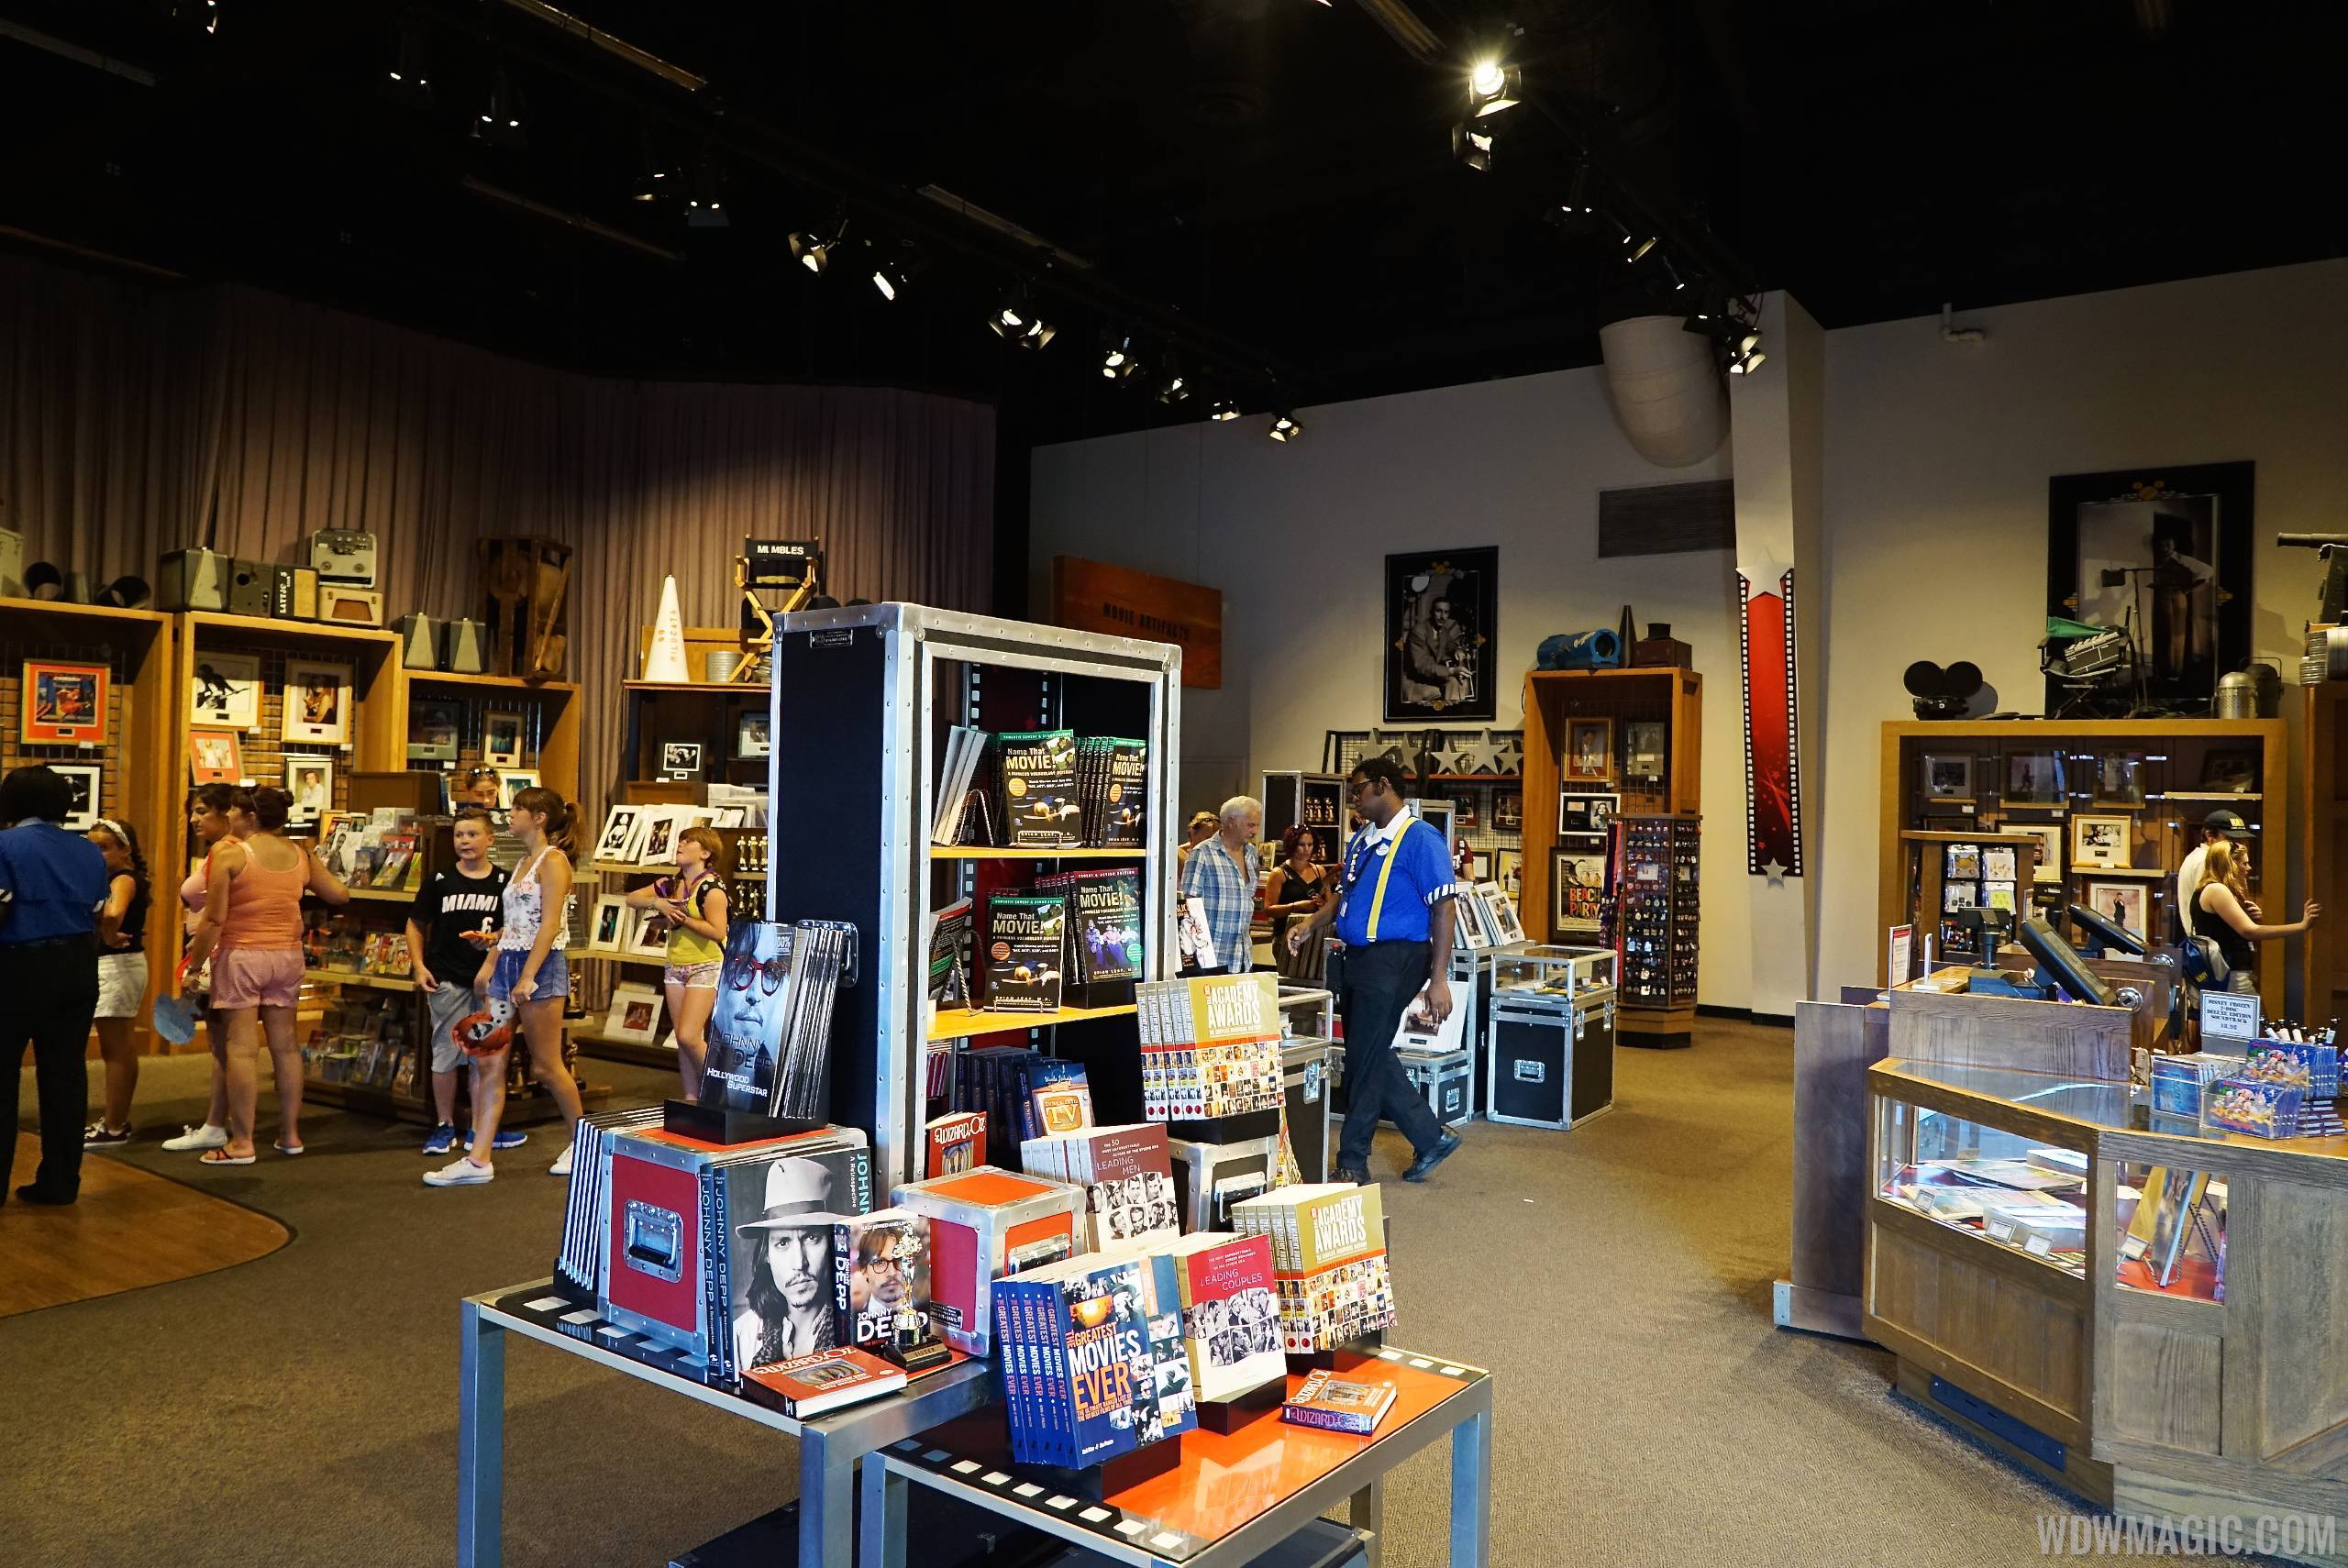 American Film Institute exhibit - Inside the Showcase Shop